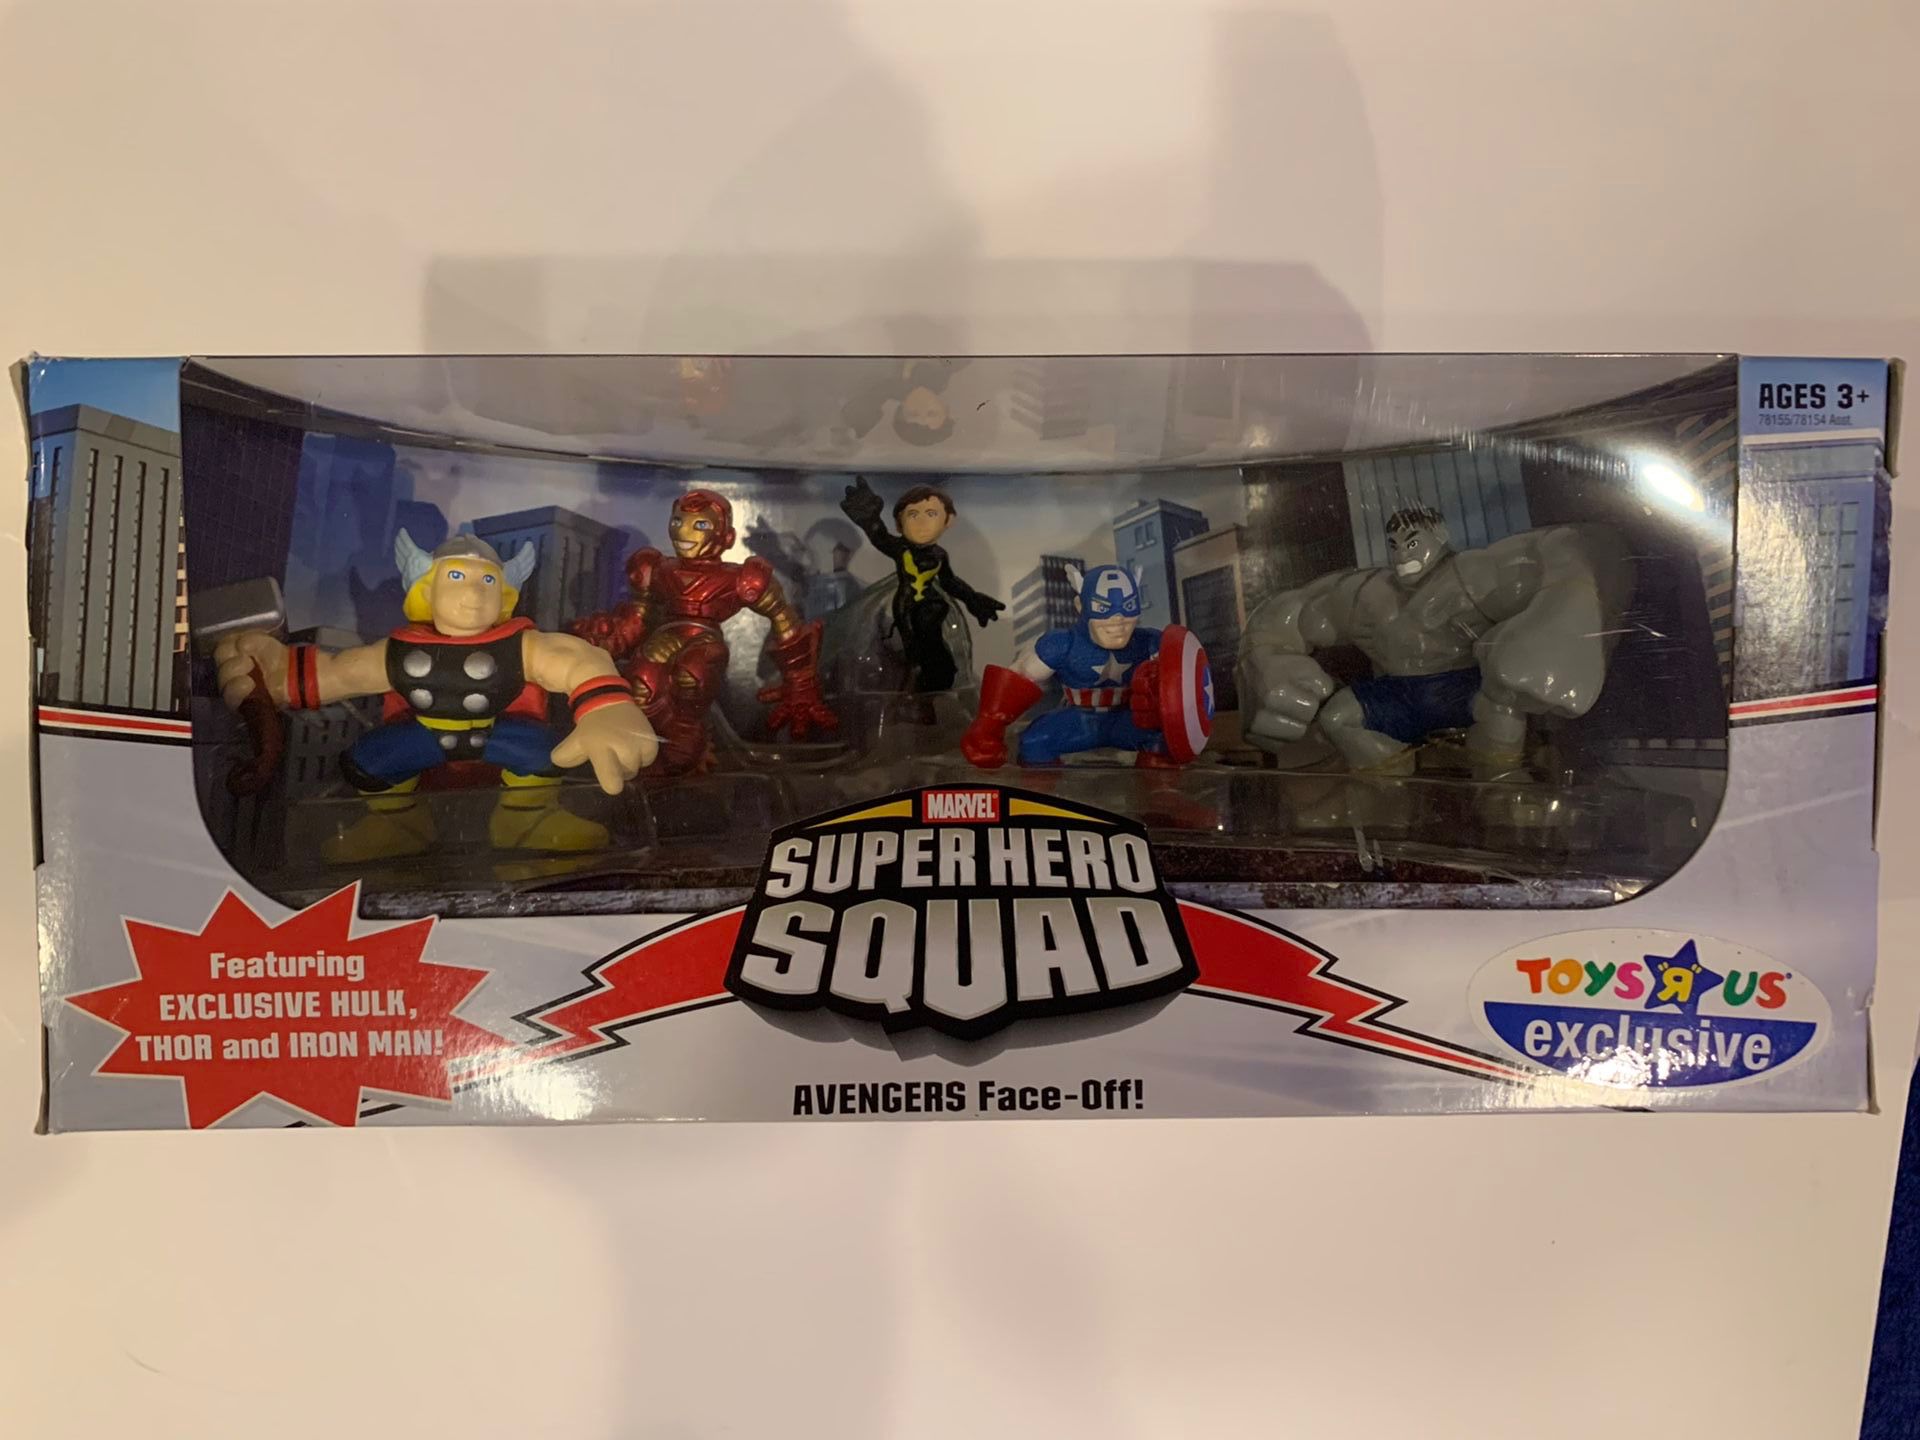 Superhero squad avengers